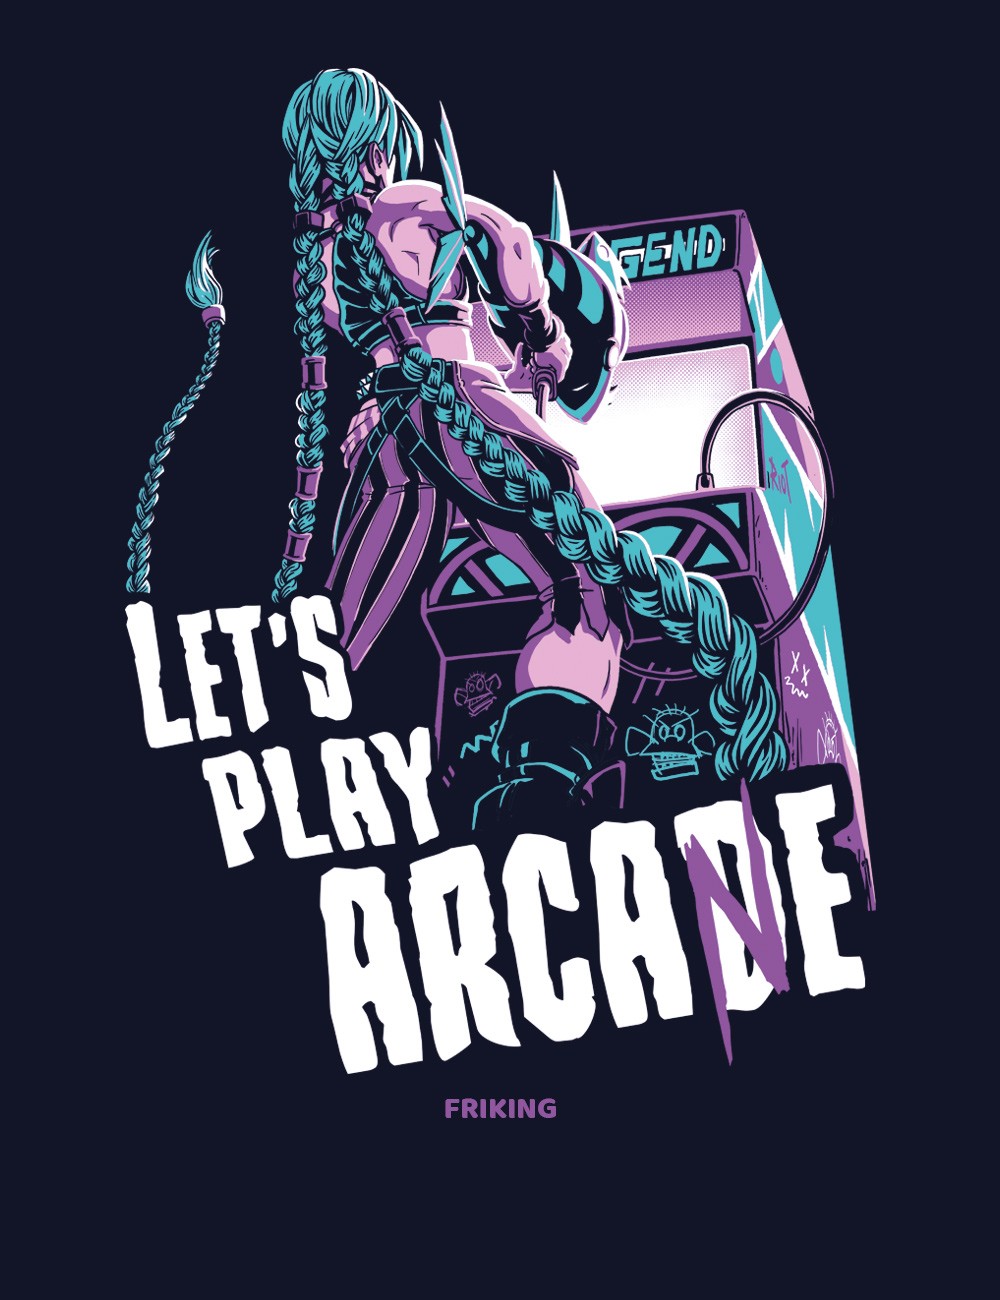 Let´s play arcade